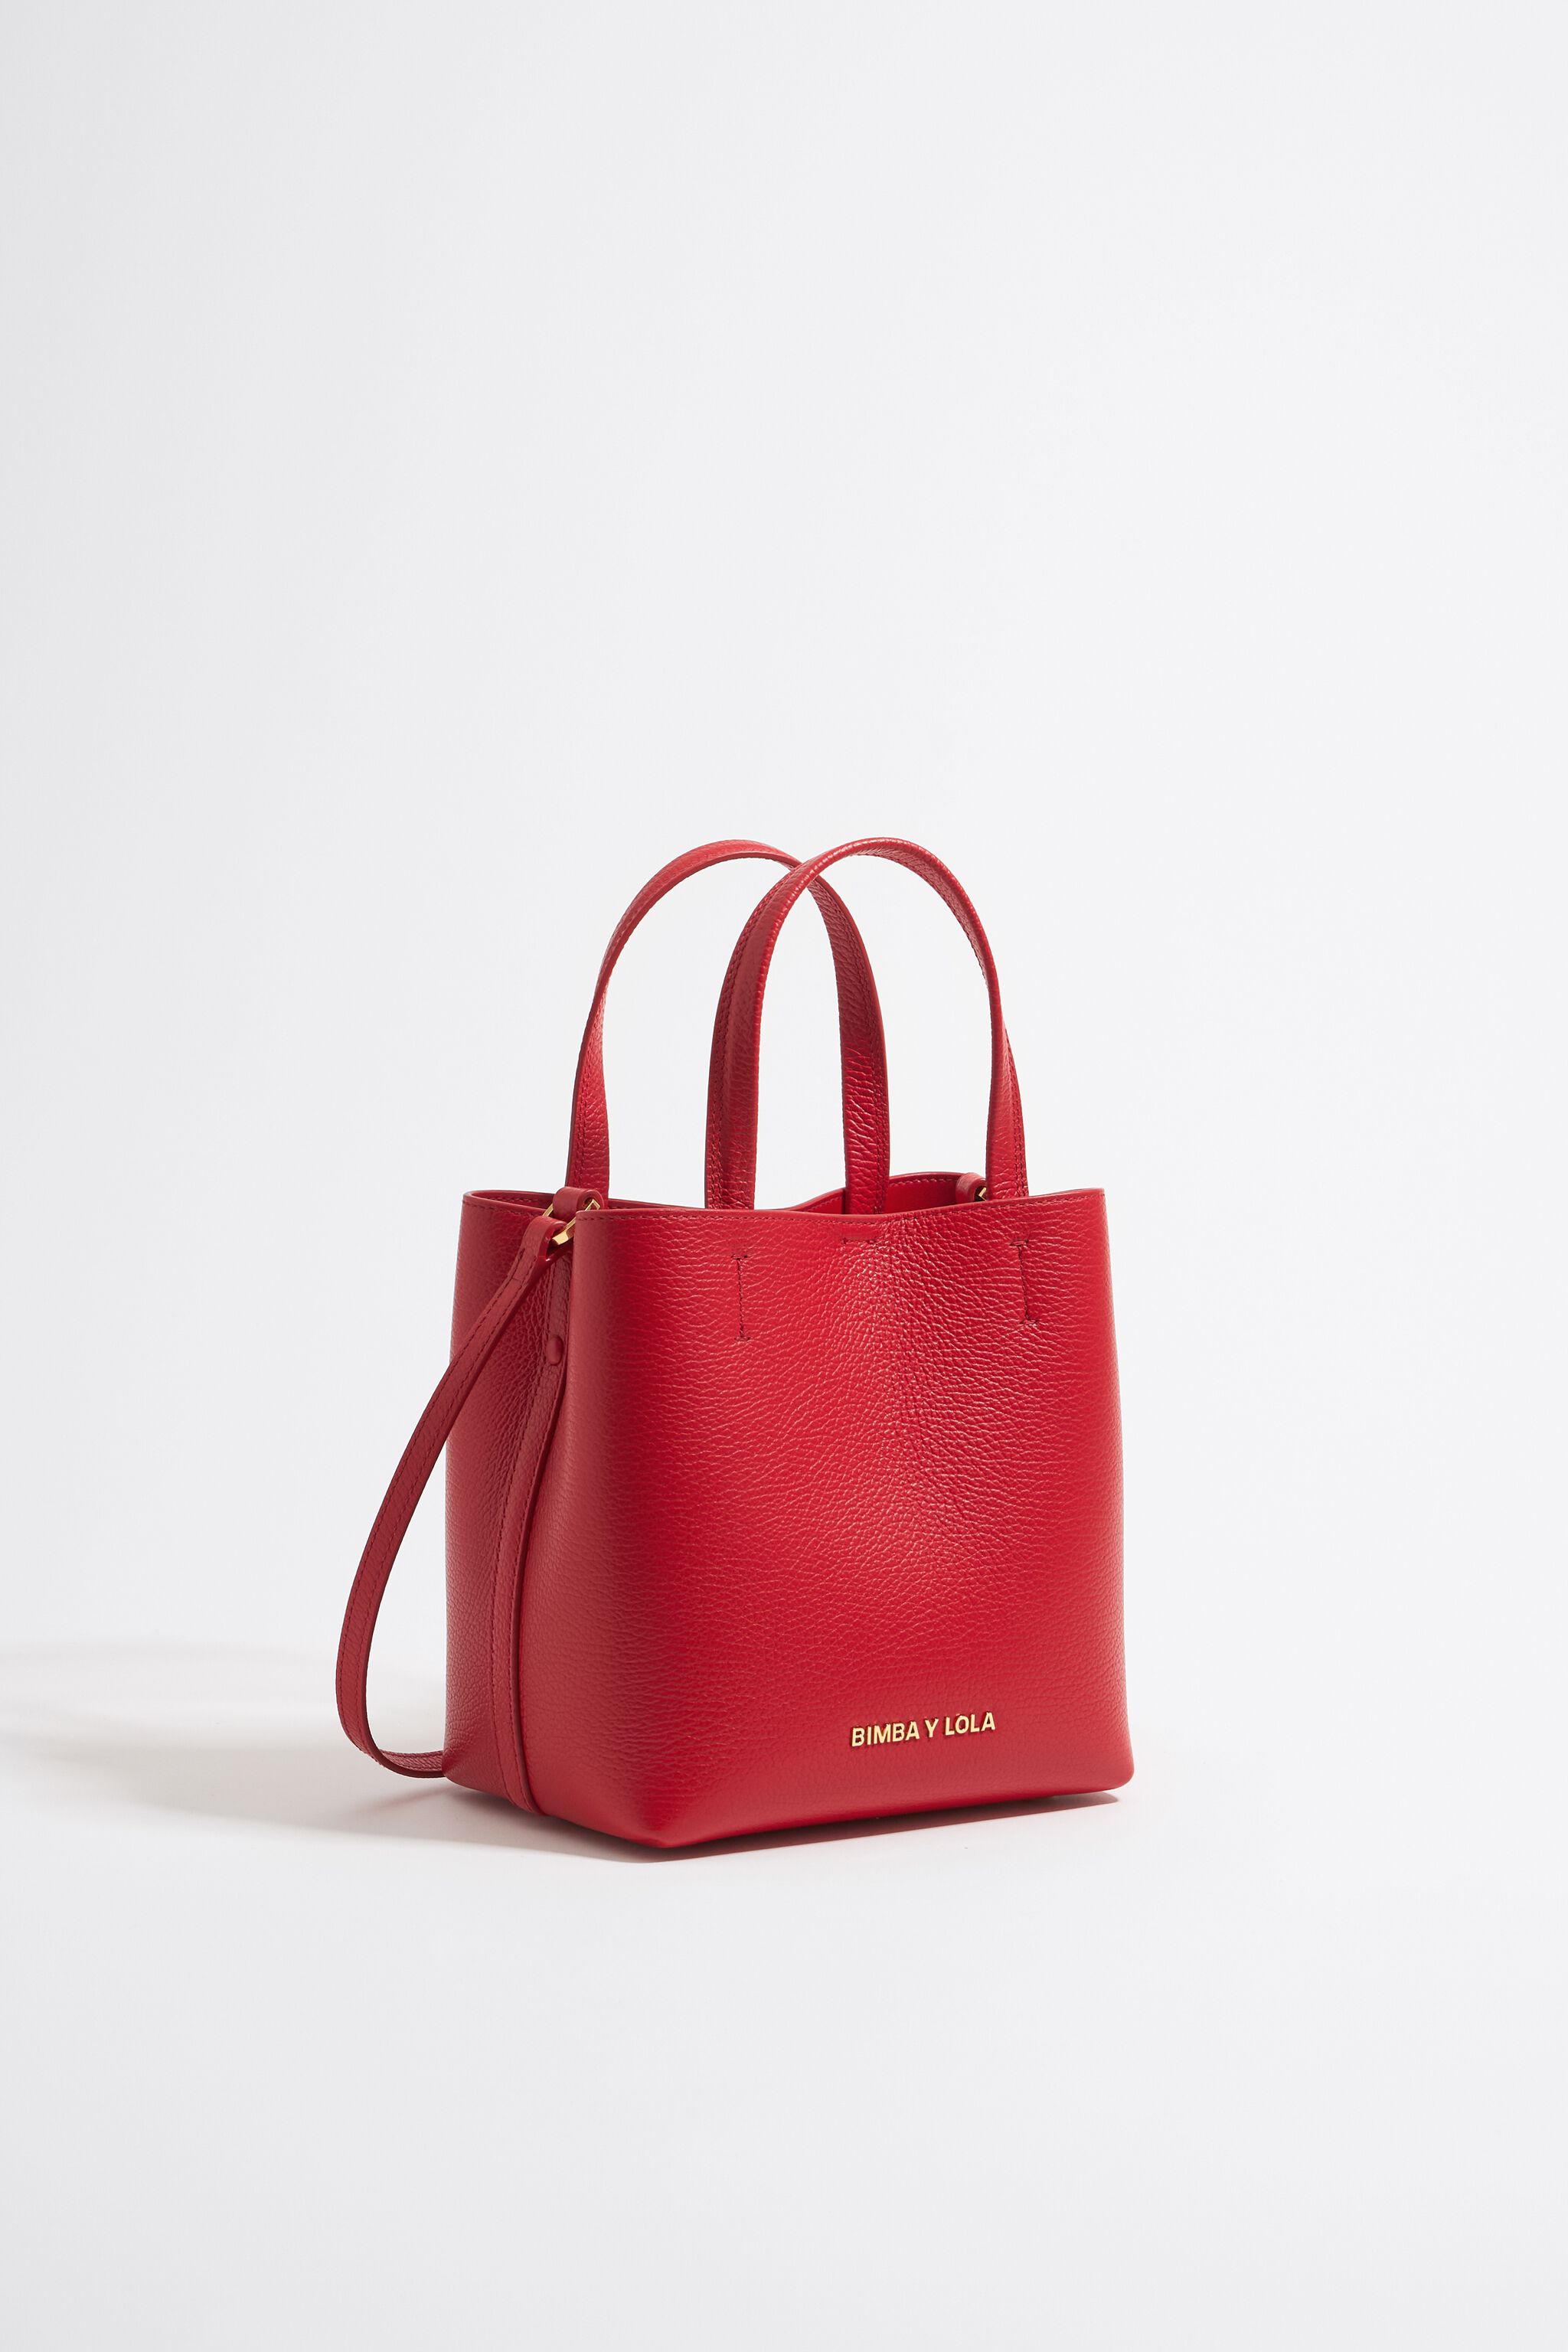 Women's Handbags | SALE. BIMBA Y LOLA